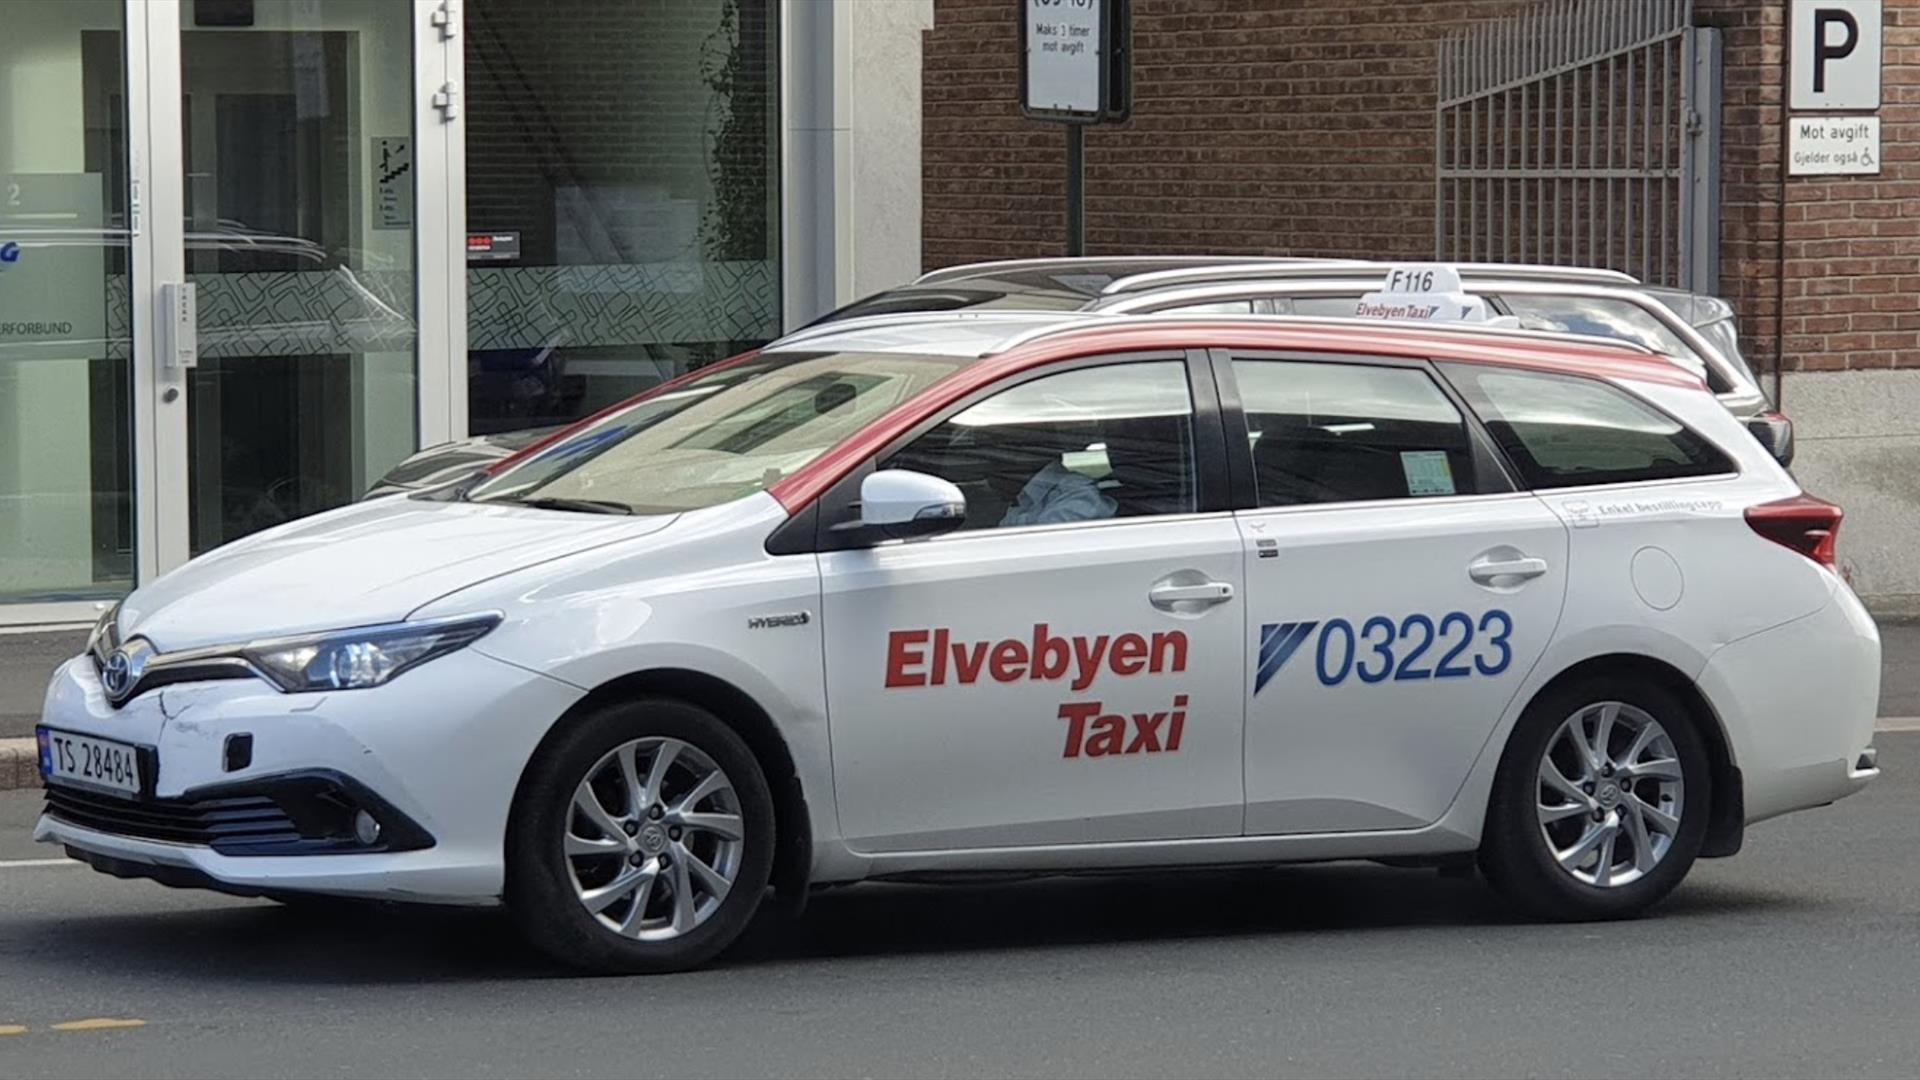 Elvebyen Taxi